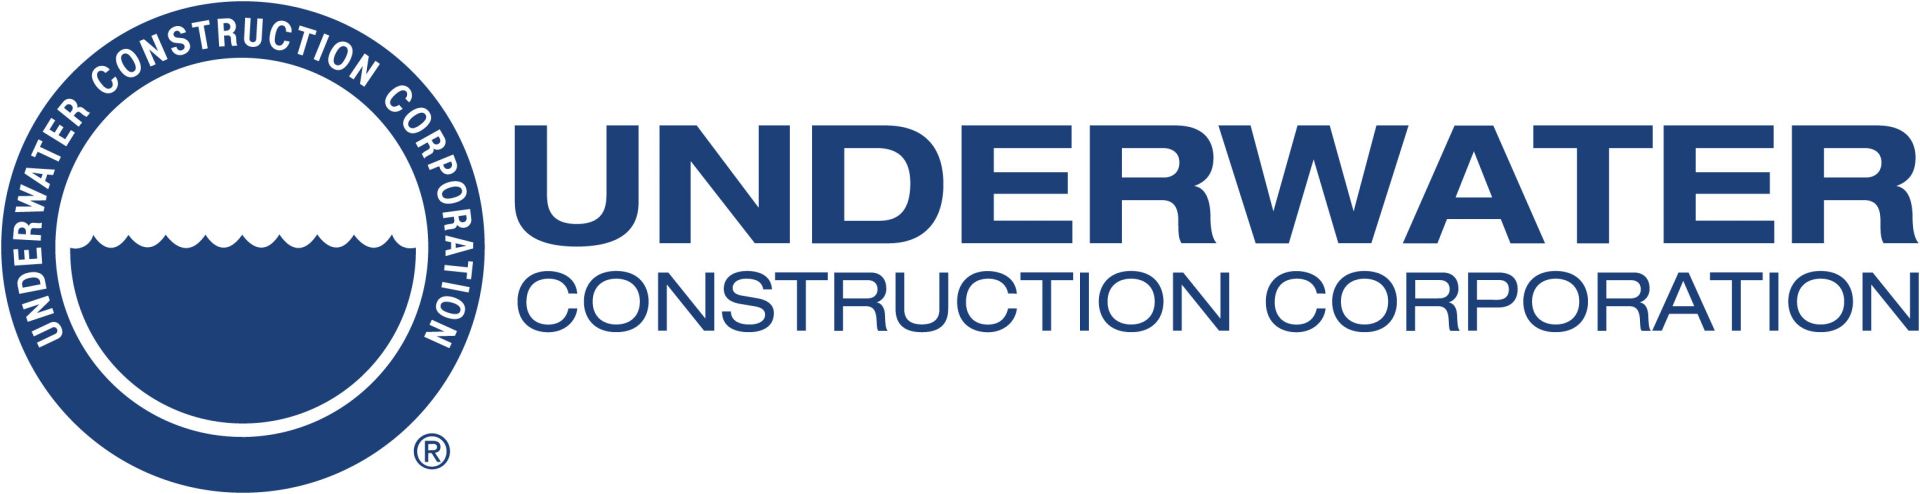 Underwater Construction Corp. logo